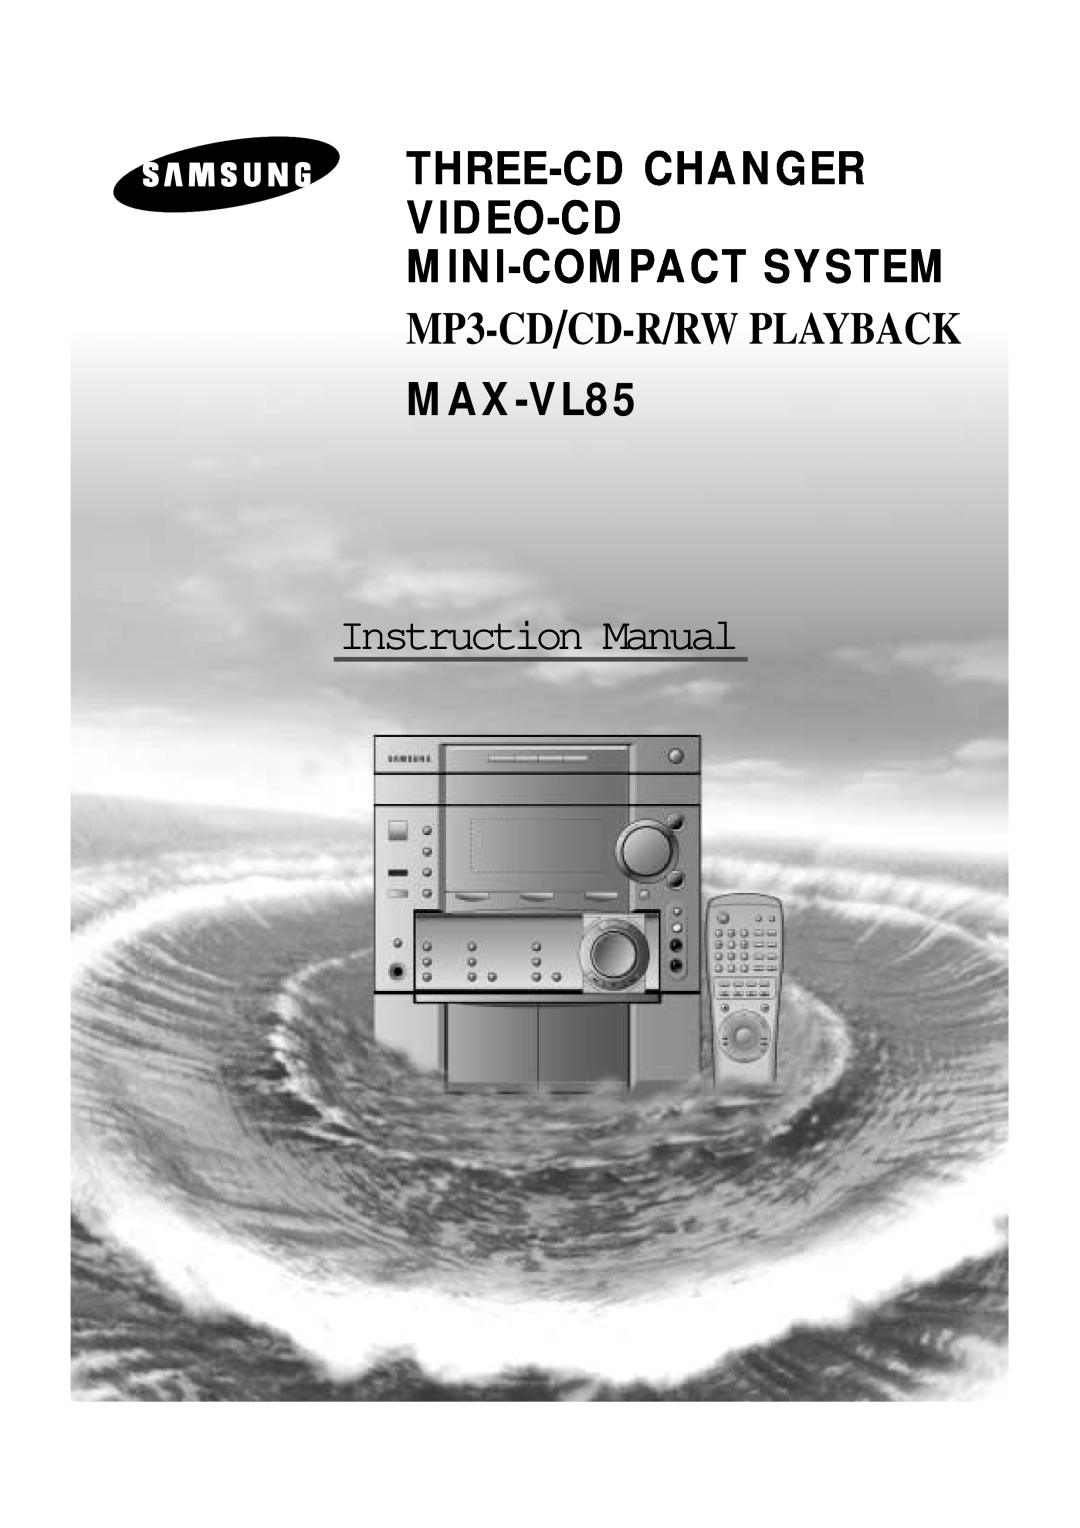 Samsung MAX-VL85 instruction manual Three-Cdchanger Video-Cd Mini-Compactsystem, MP3-CD/CD-R/RWPLAYBACK 